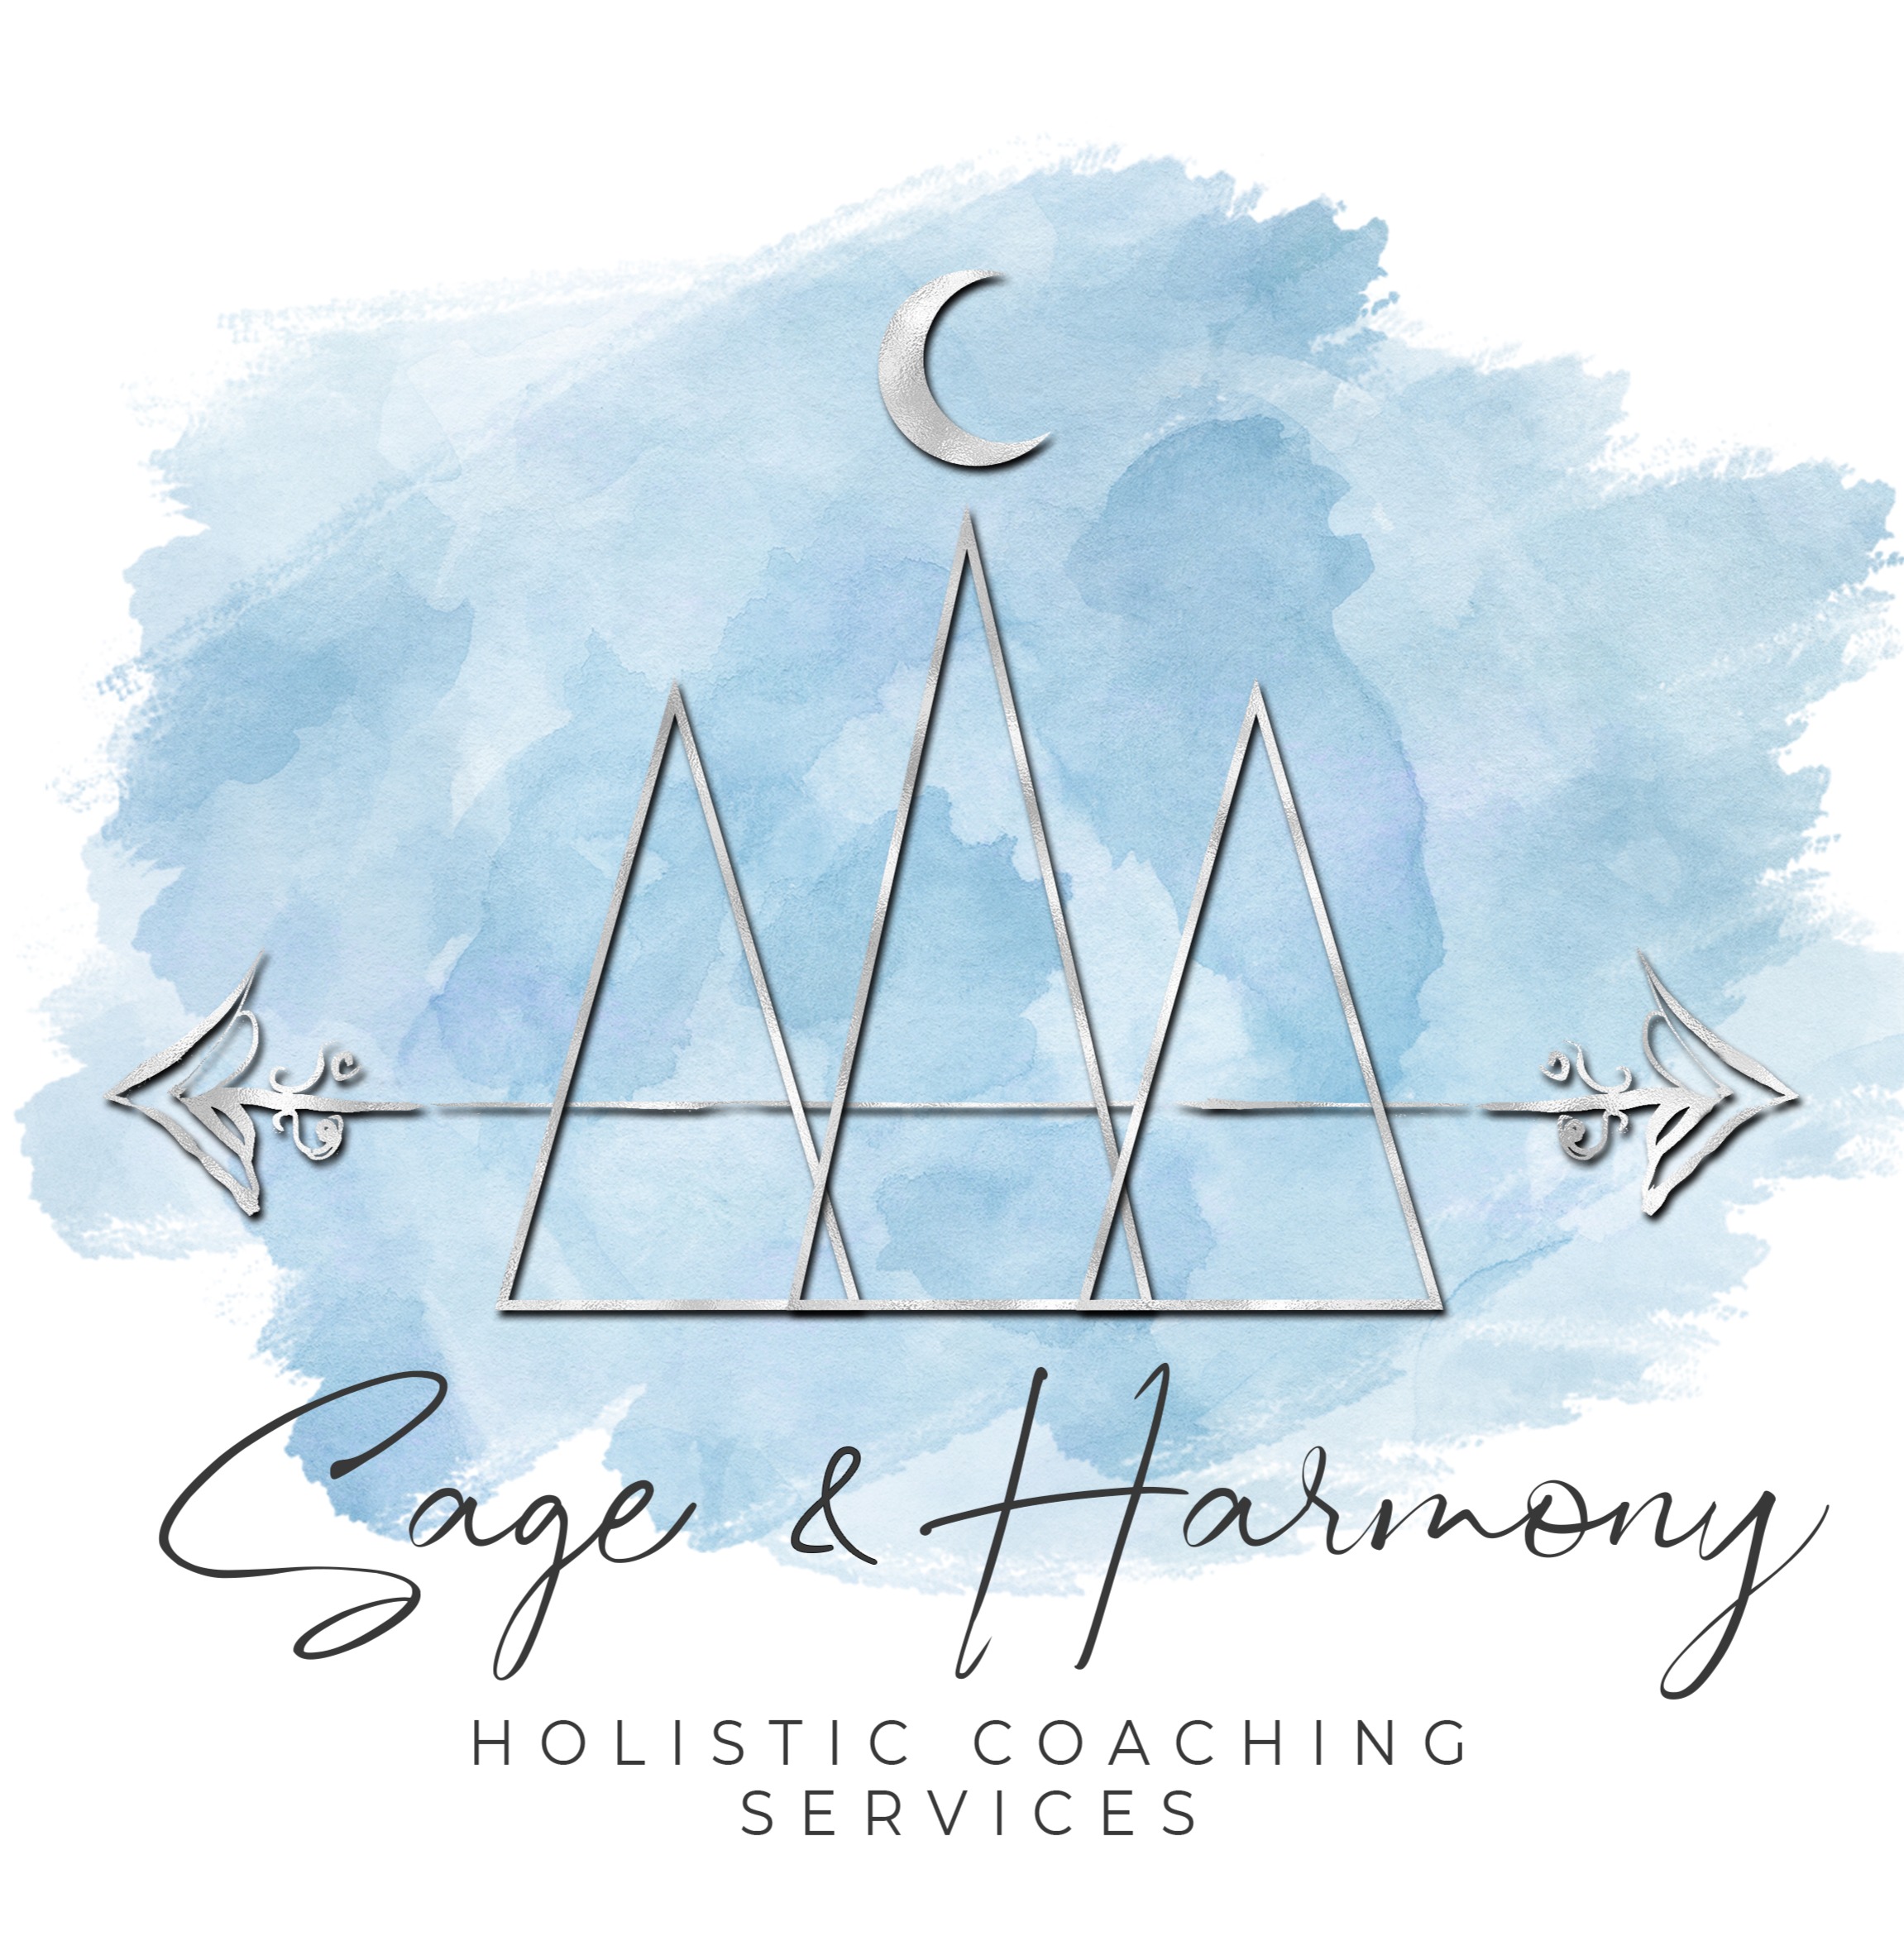 Sage & Harmony Holistic Coaching Services